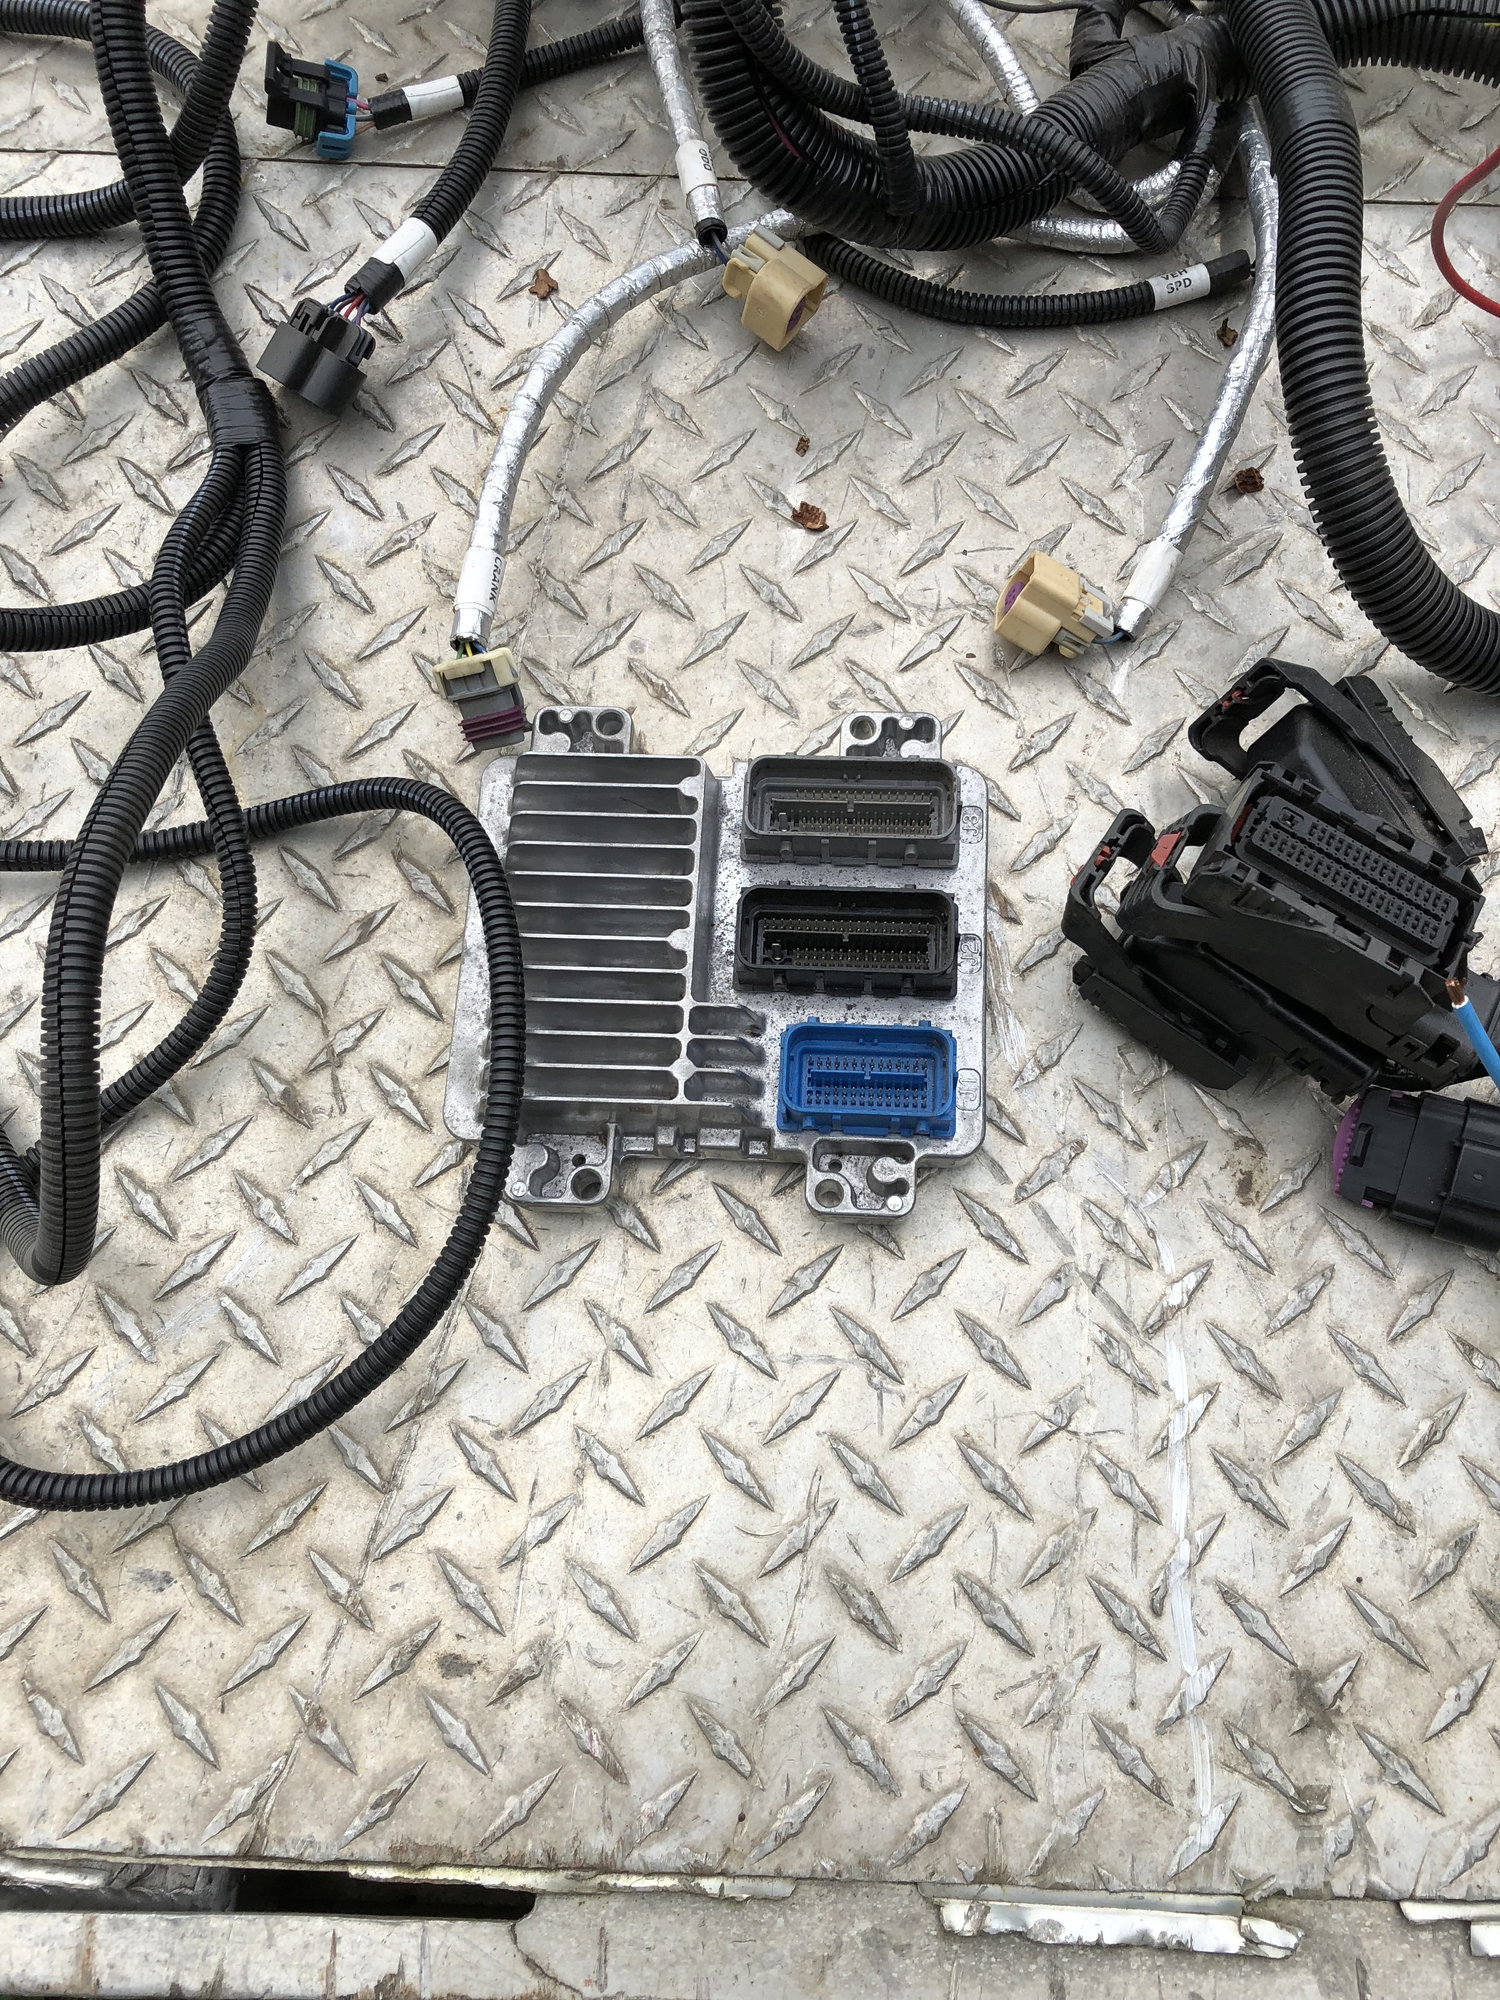 GMPP LS3/hotrod swap wiring harness & ECU - LS1TECH - Camaro and